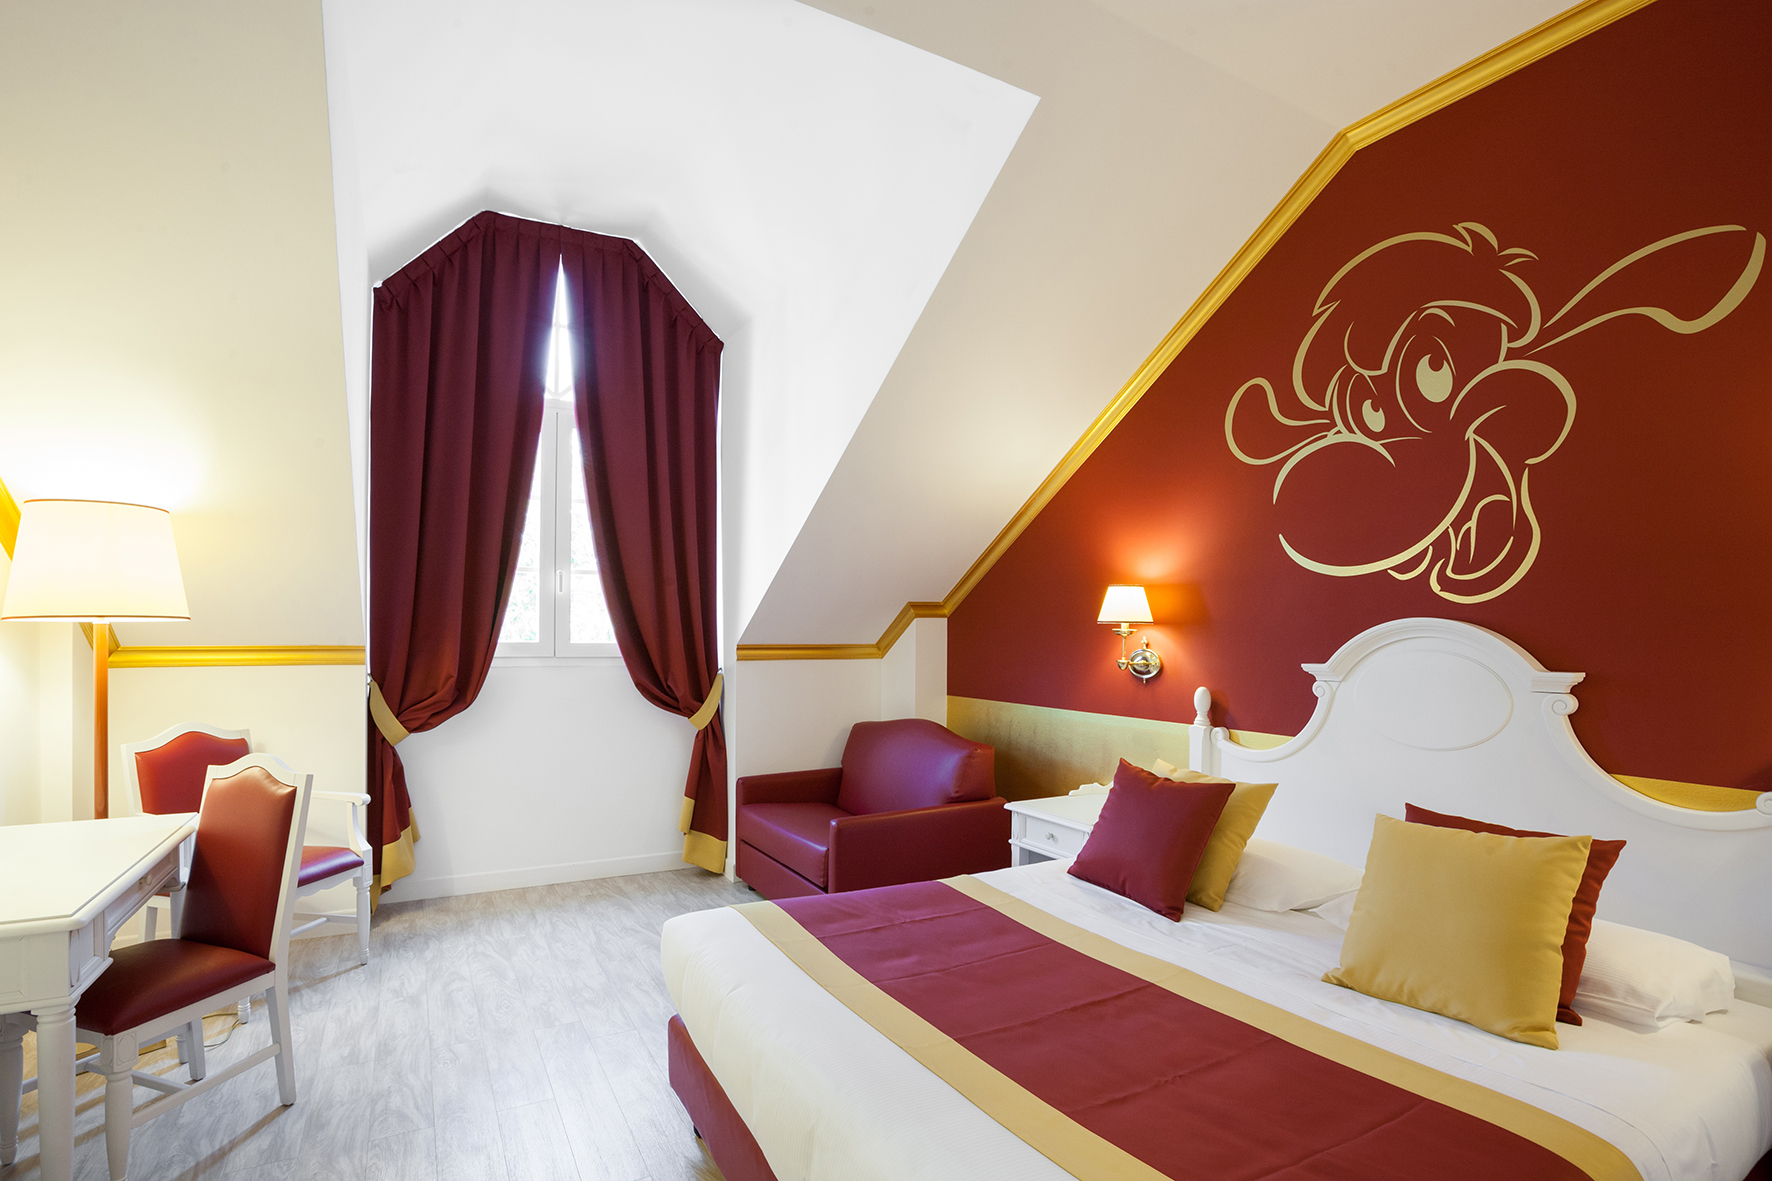 Gardaland Hotel - Classic Room